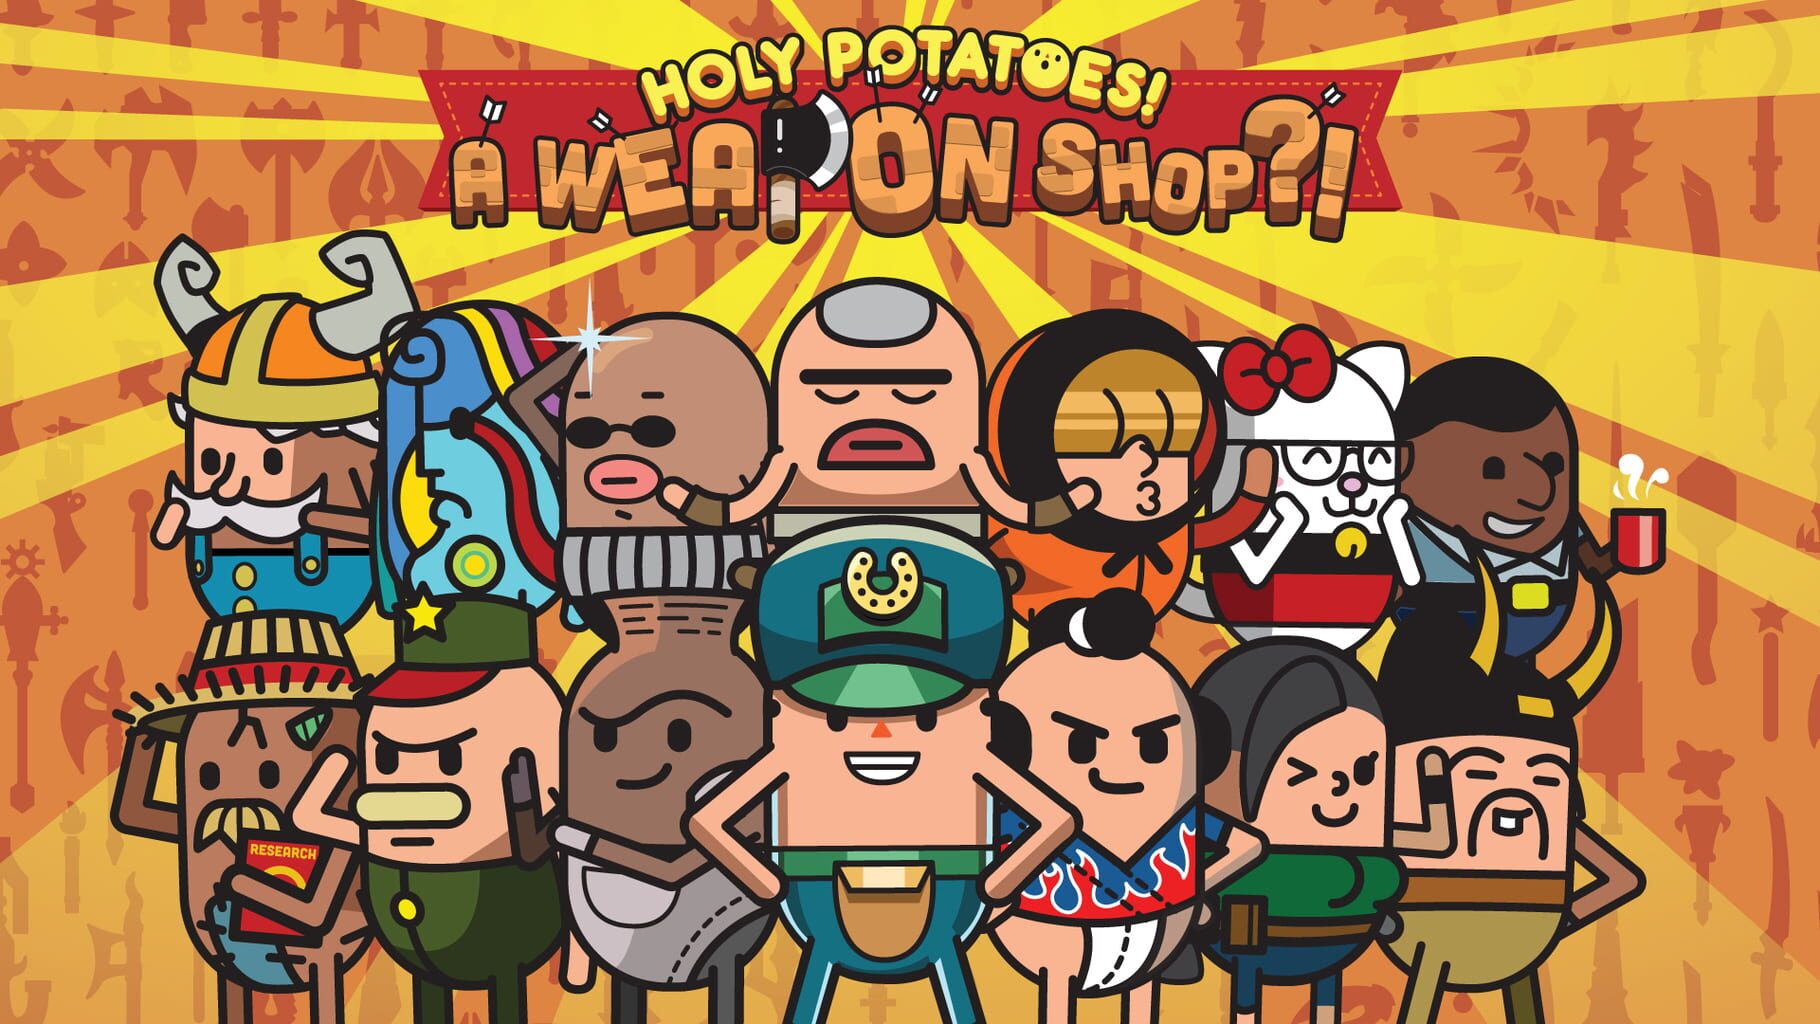 Holy Potatoes! A Weapon Shop?! artwork